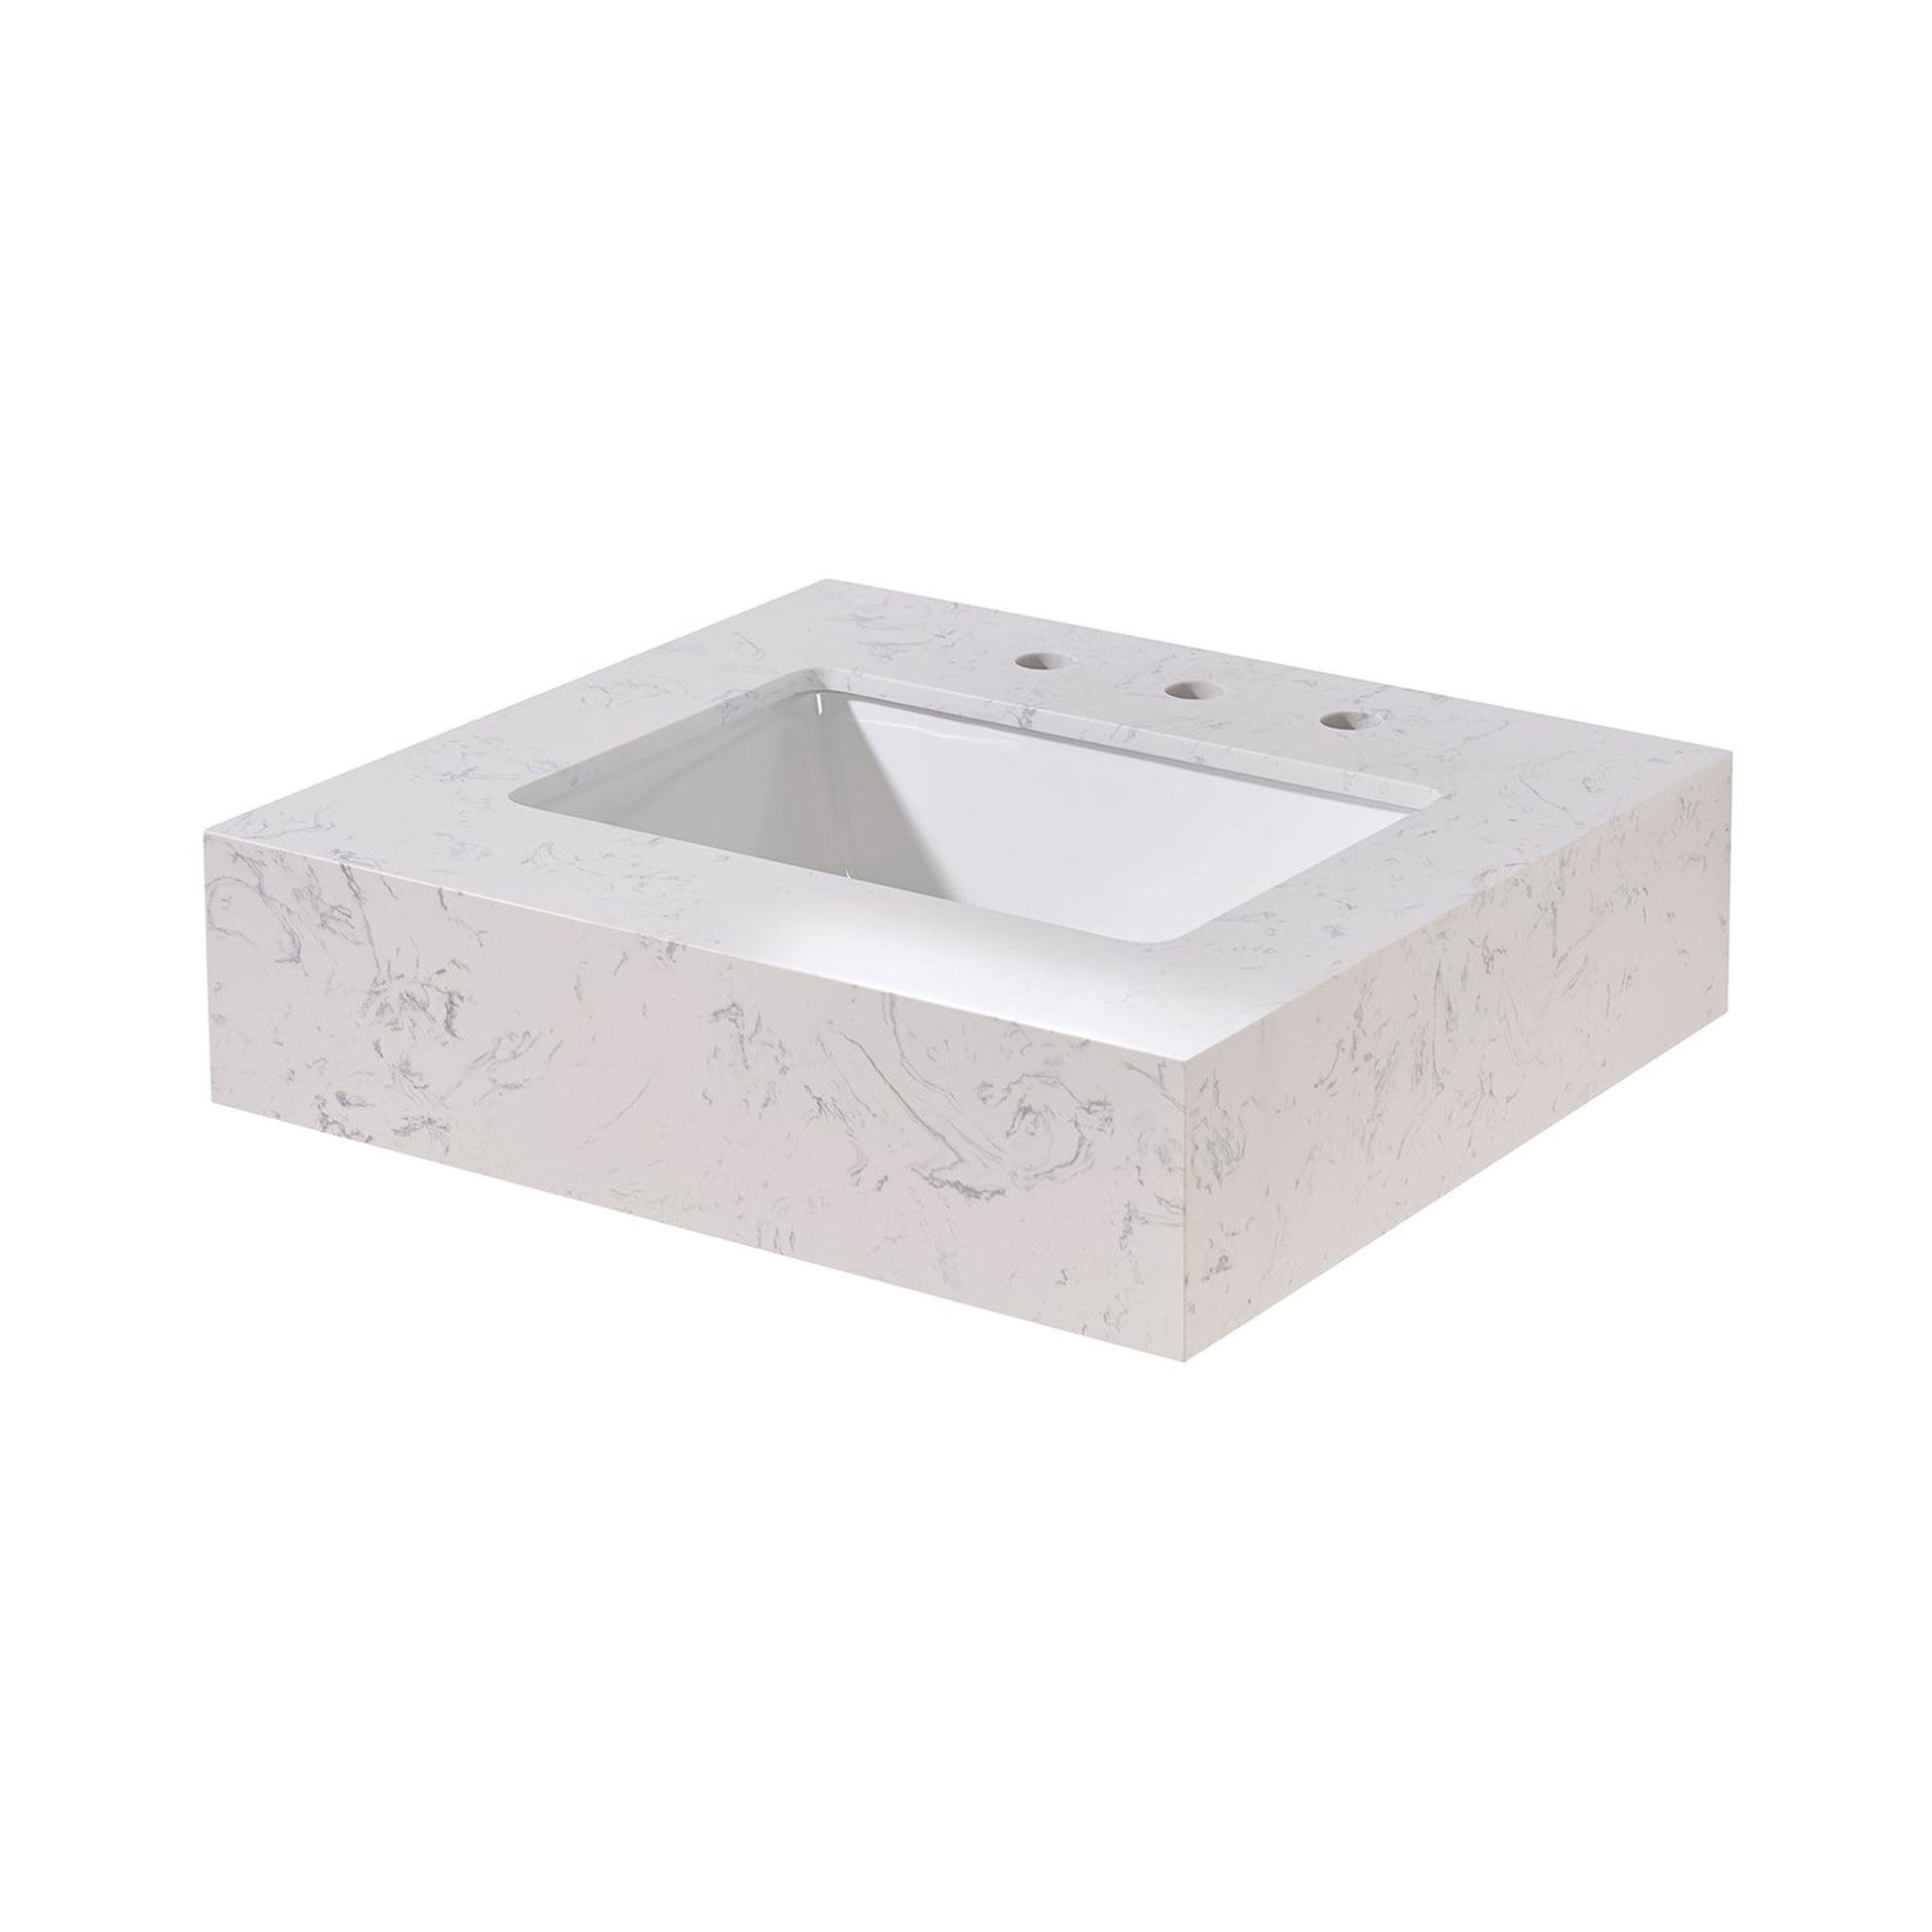 Altair Merano 24" x 22" Aosta White Apron Composite Stone Bathroom Vanity Top With White SInk